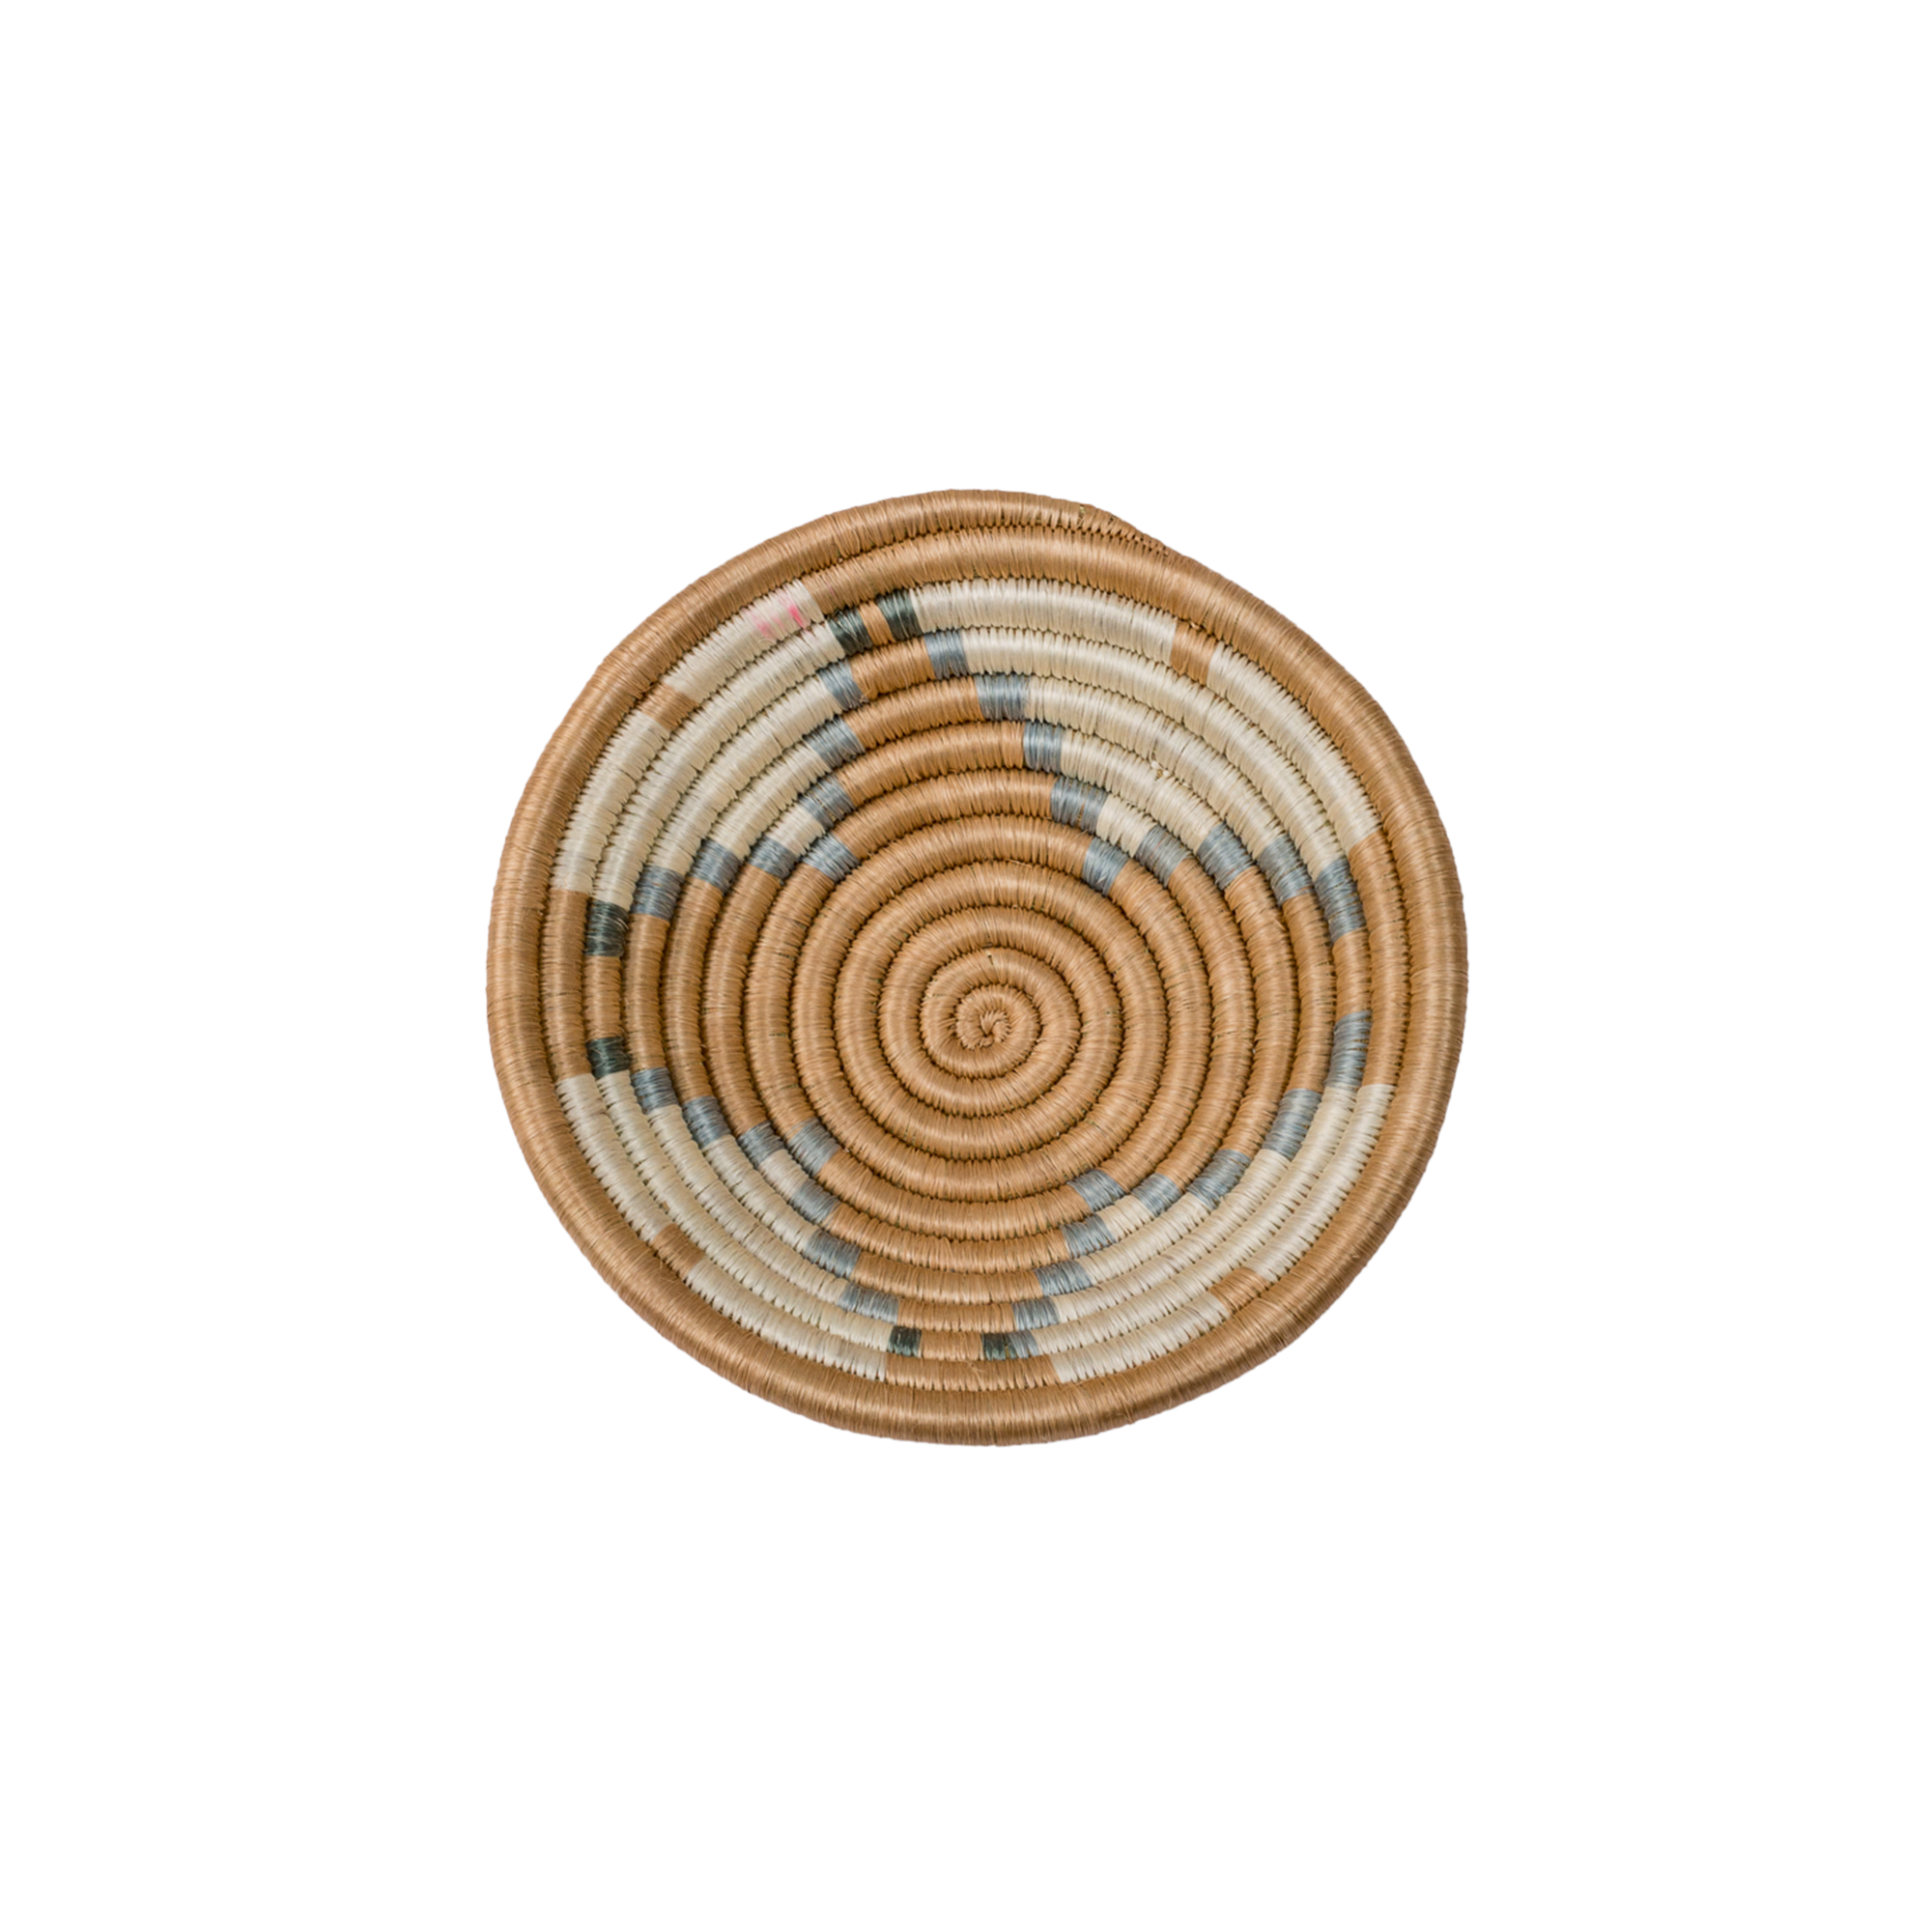 Small Handwoven Rwandan Basket - Beige Patterns (19cm)